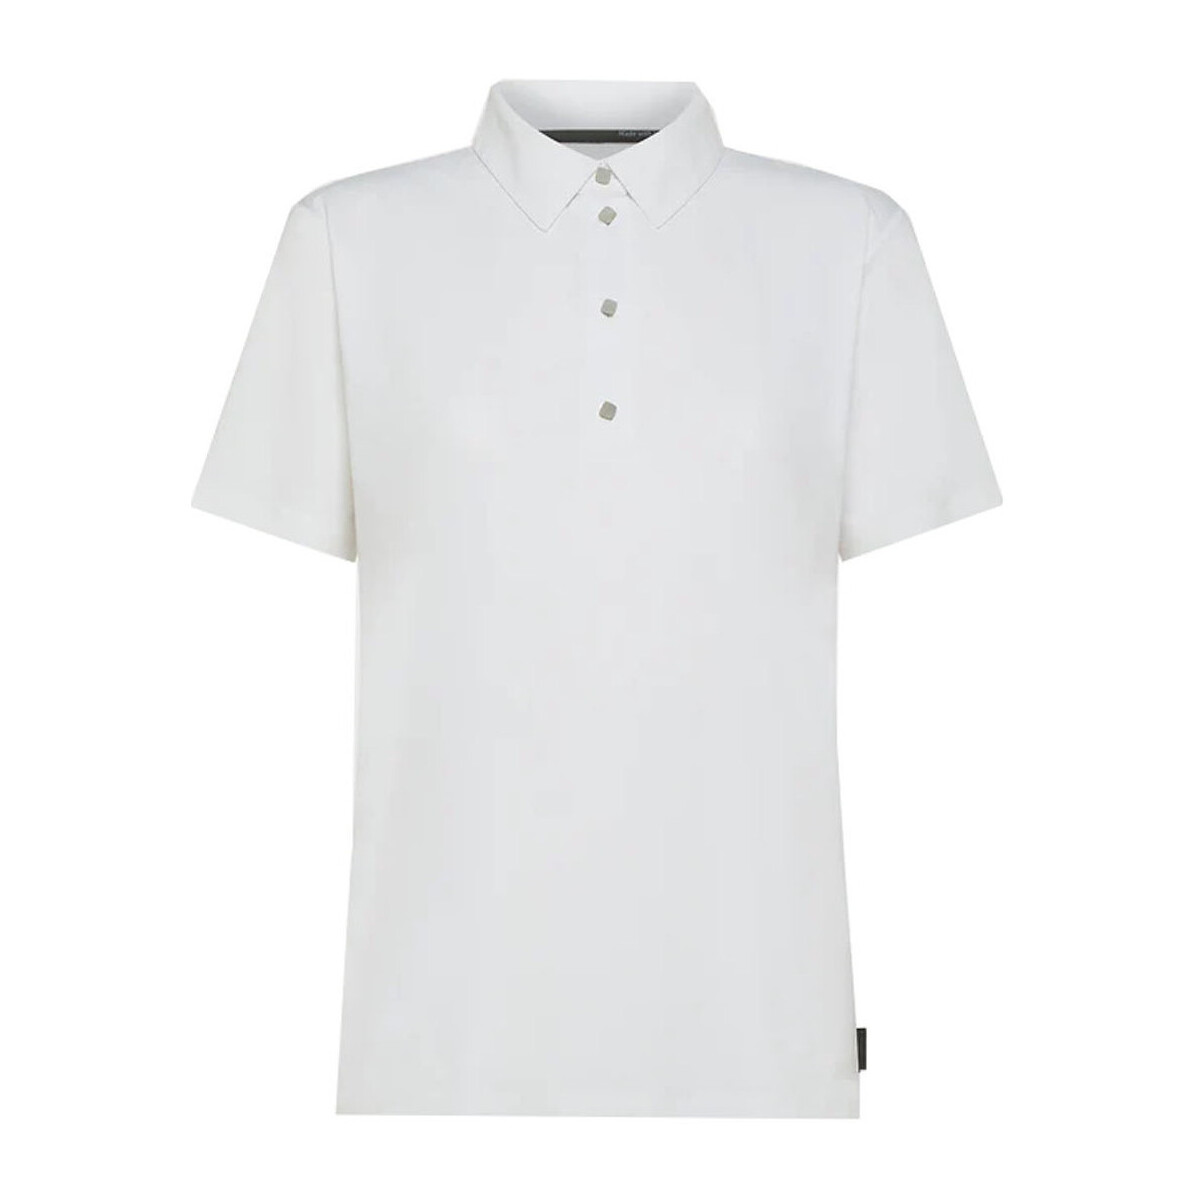 Vêtements Femme T-shirts manches courtes Rrd - Roberto Ricci Designs 24704-09 Blanc